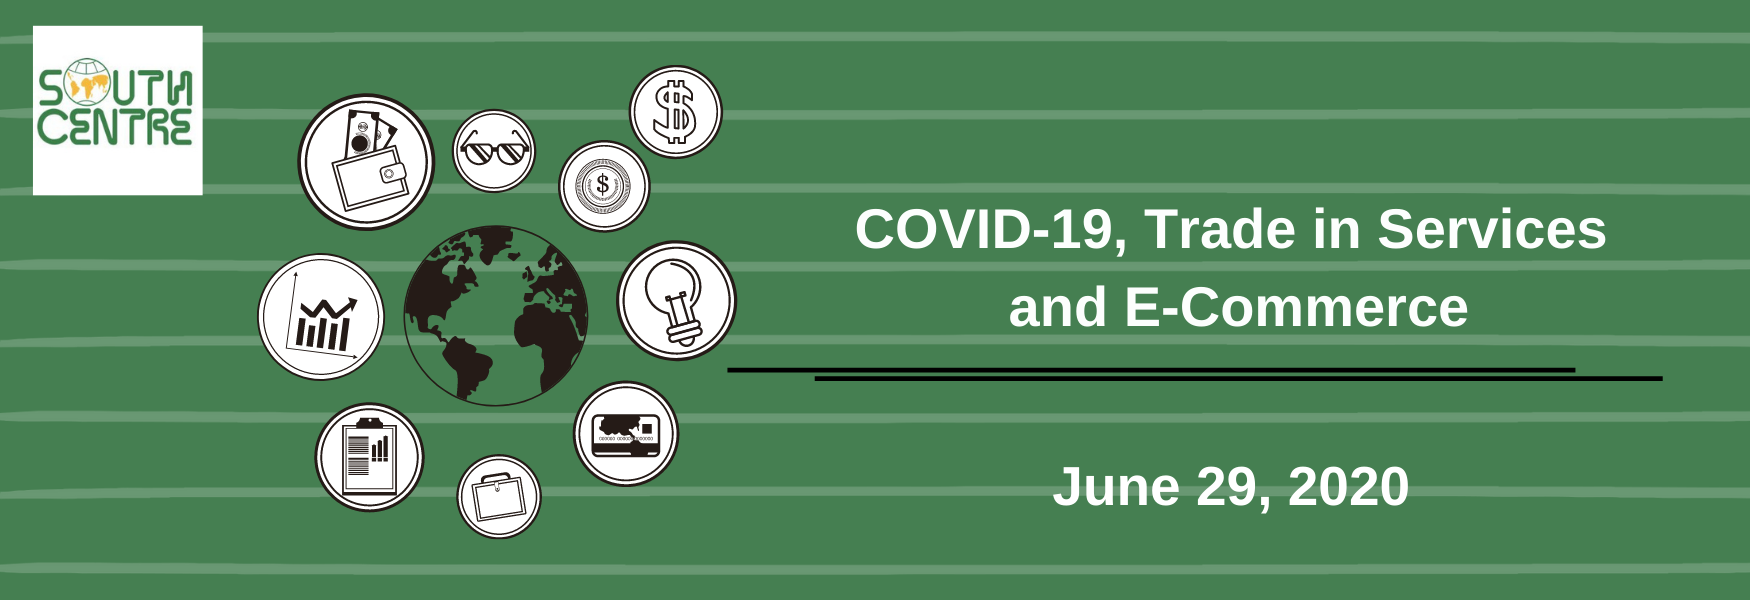 COVID-19, Trade in Services and E-Commerce